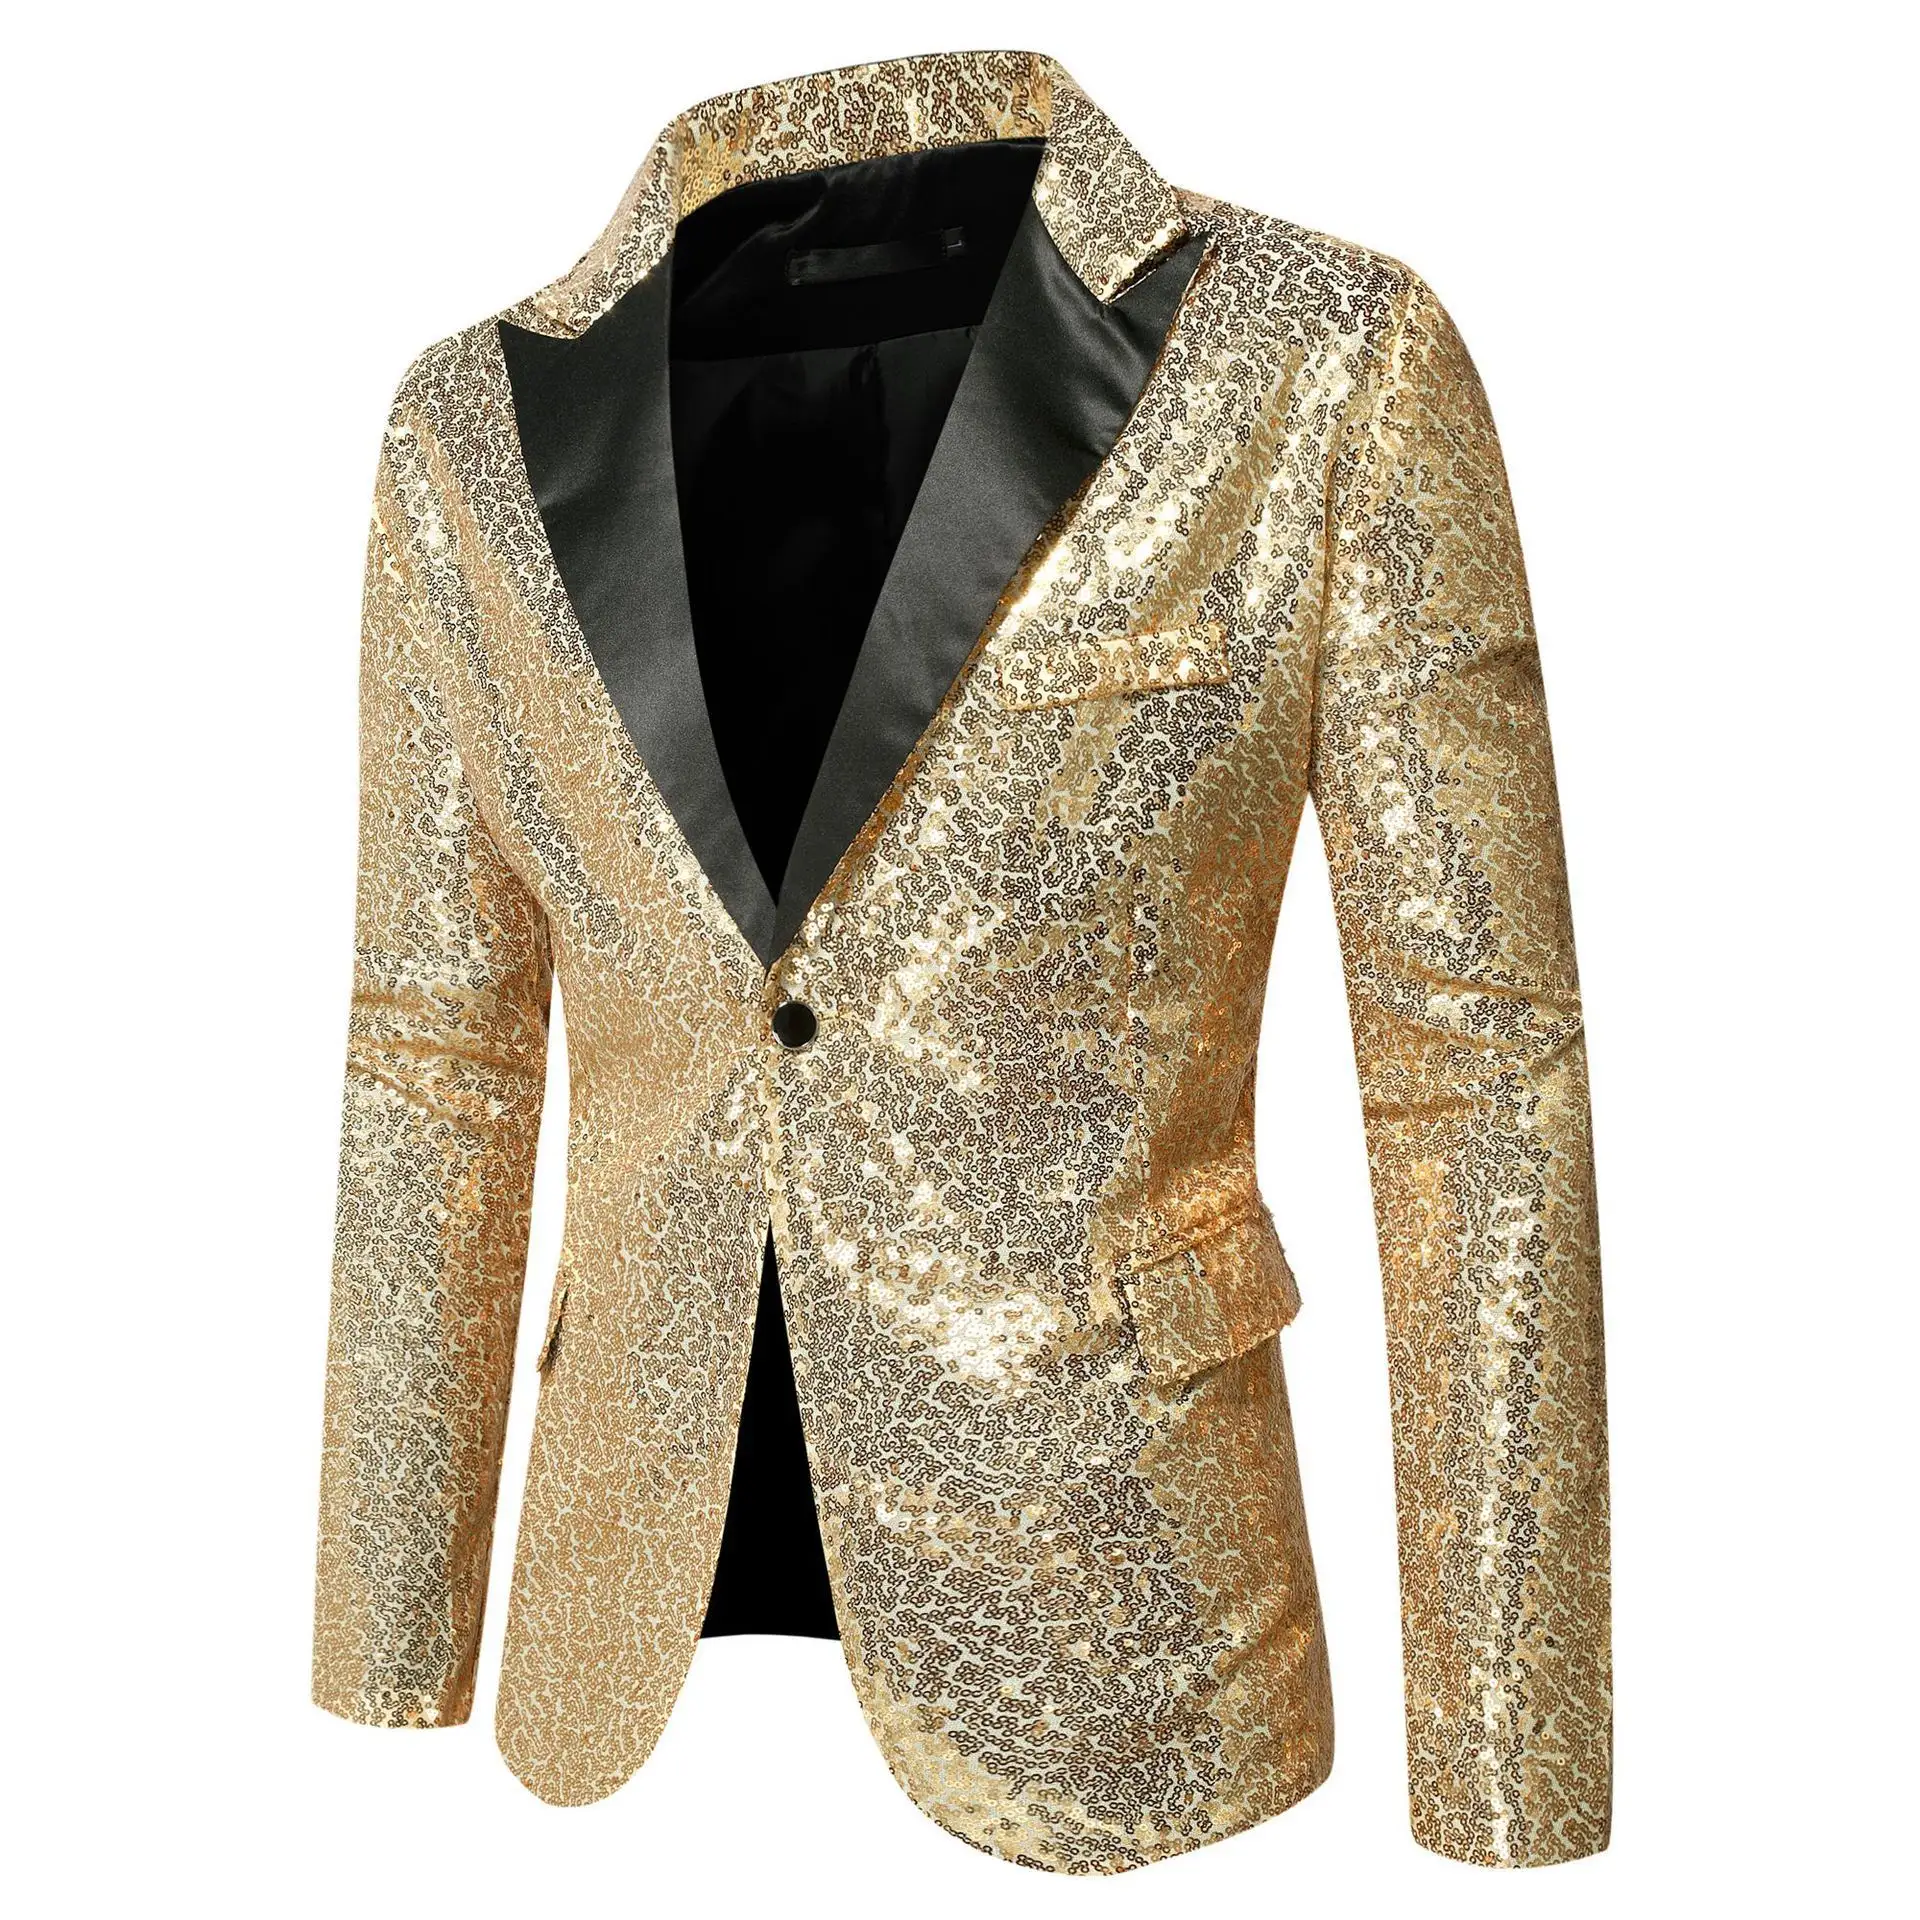 Men Glitters Suit Jackets Sequin Party Button Dance Bling Coats Wedding Party Blazer Gentleman Casual Suit Nightclub Stage Sing